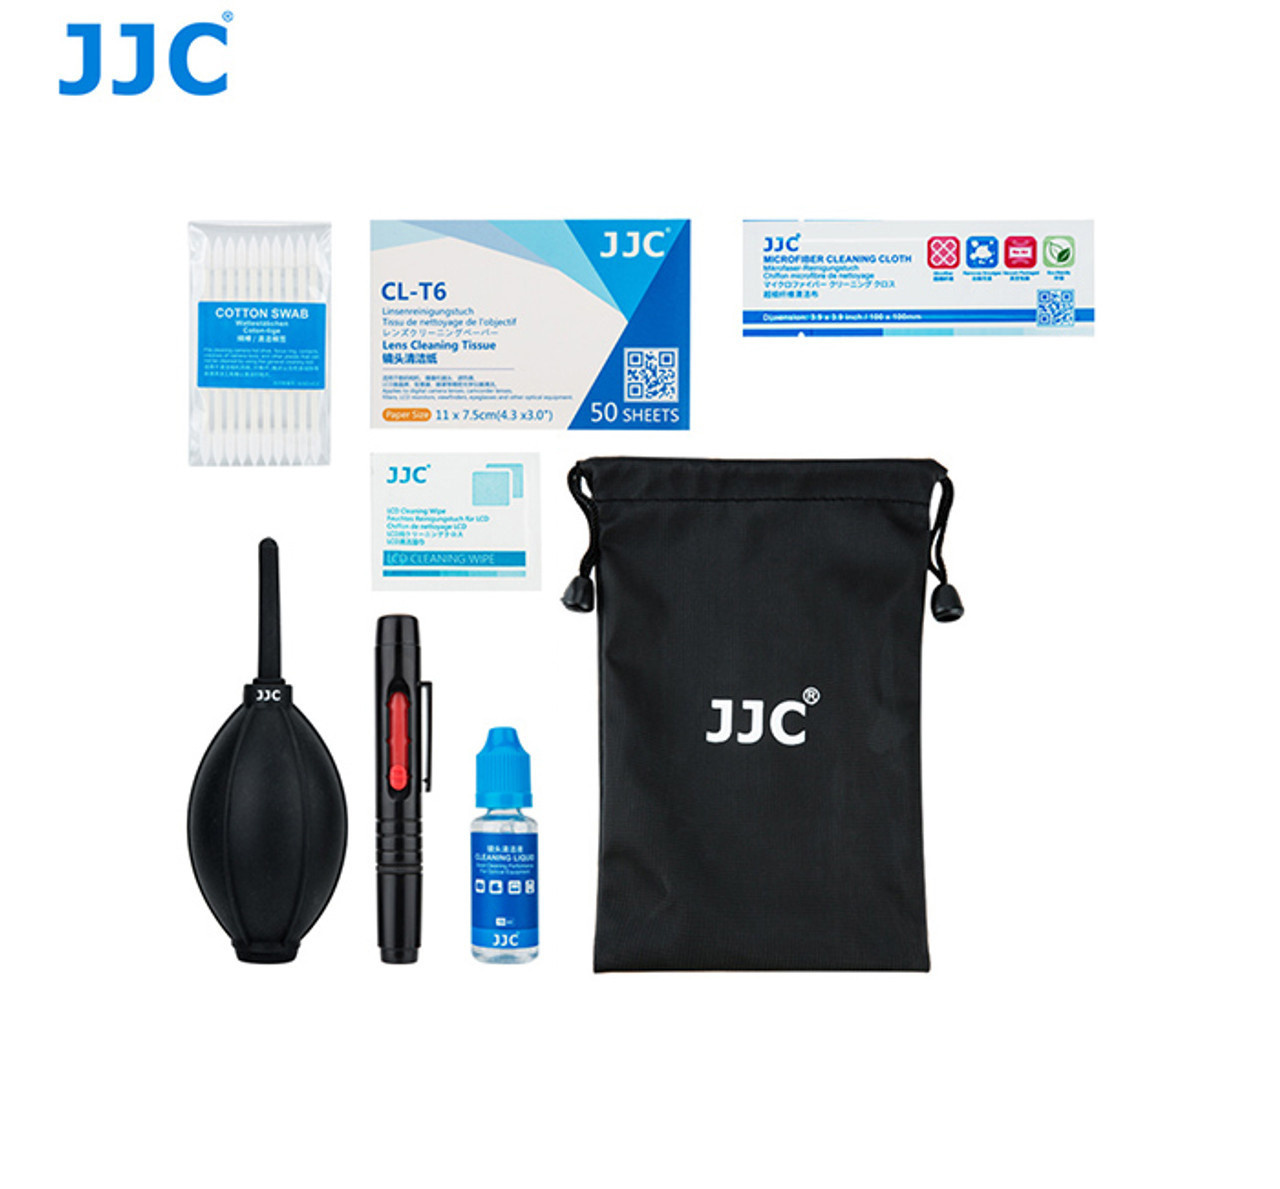 JJC CL-PRO2 Cleaning Kit